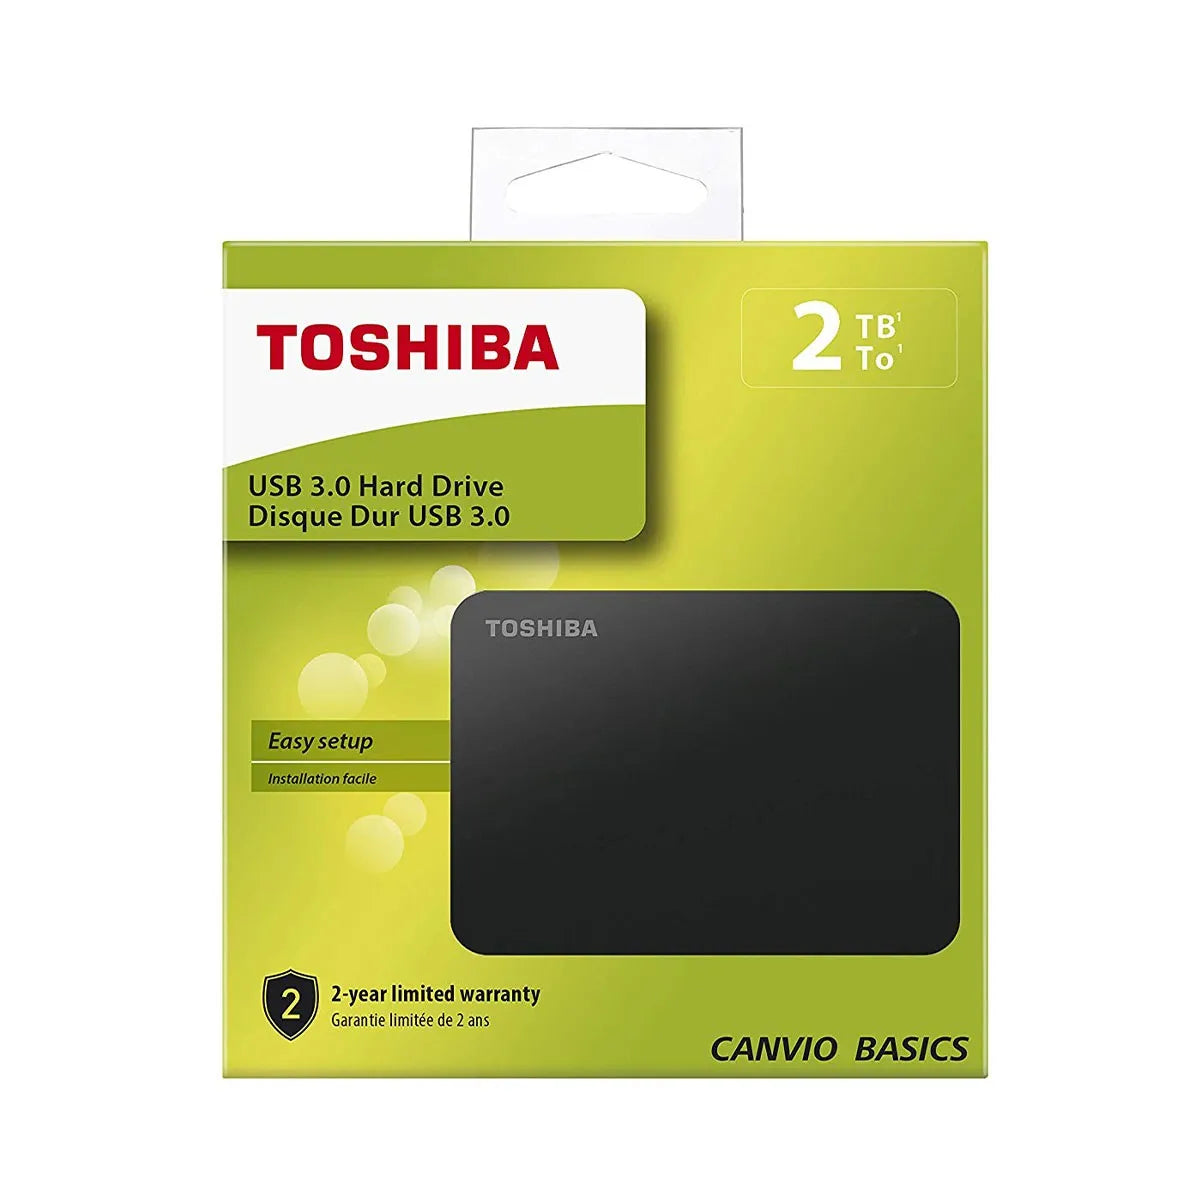 Toshiba external hard disk 2TB